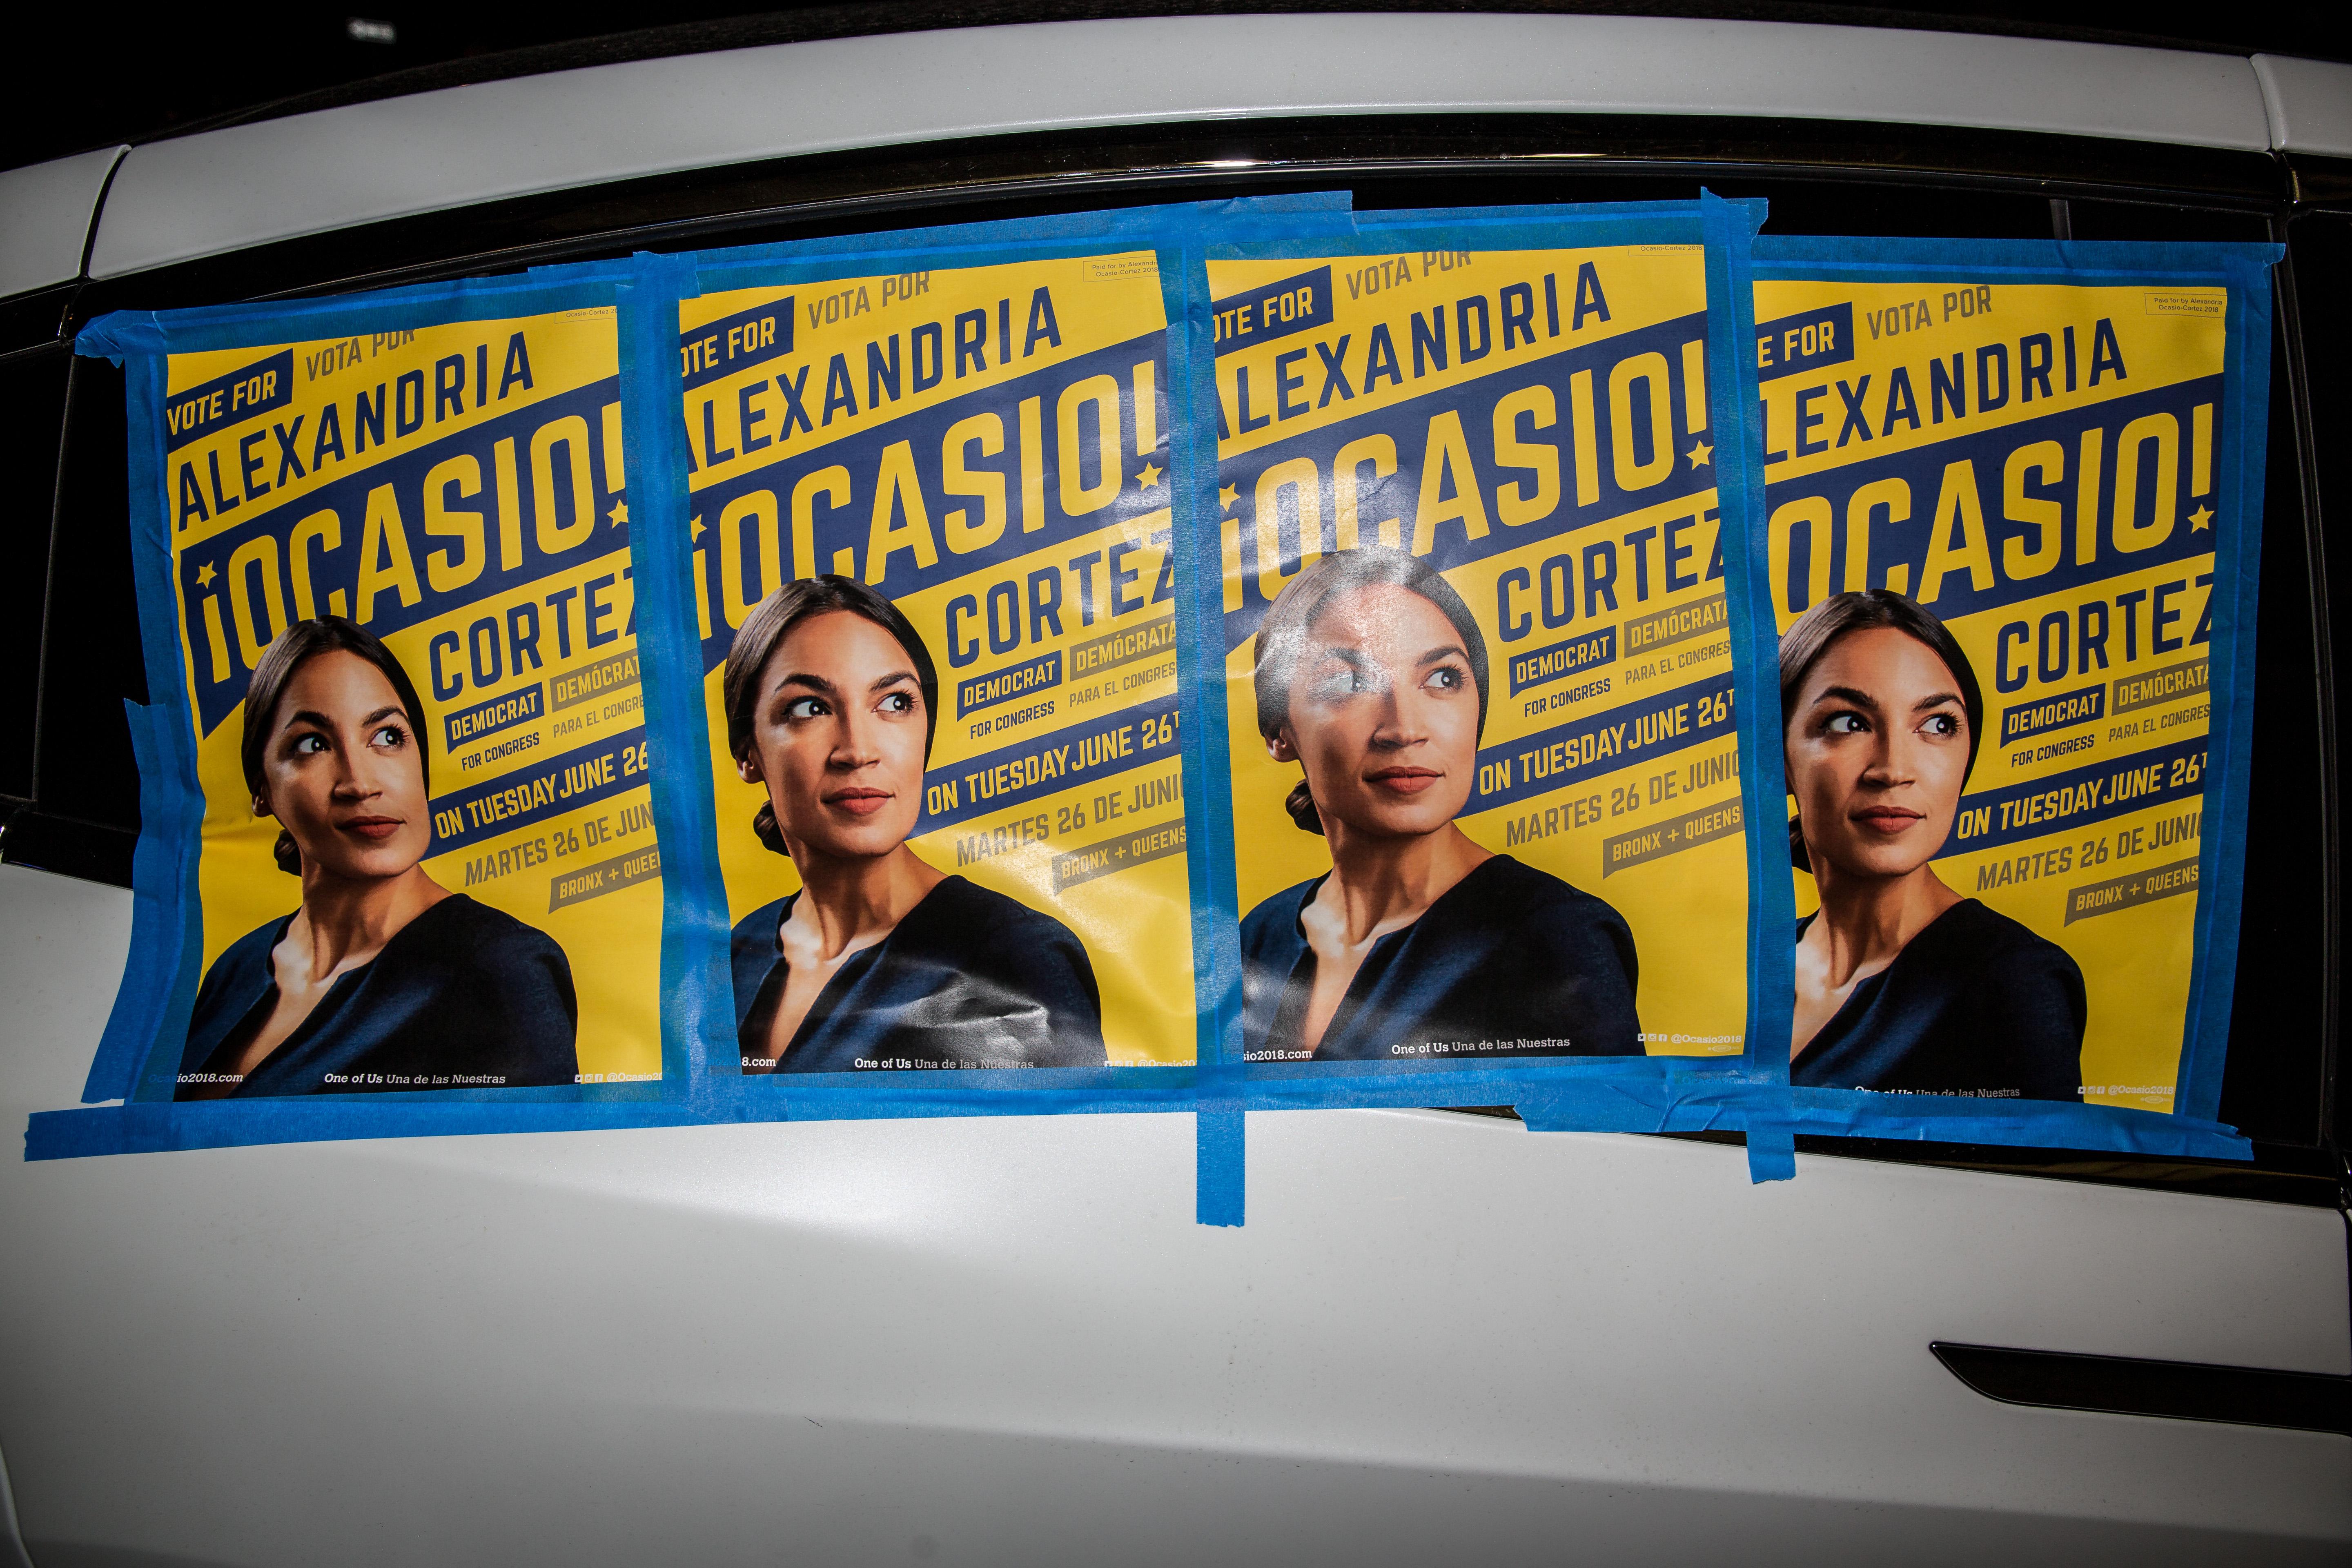 Posters for Democratic candidate Alexandria Ocasio-Cortez in the Bronx.